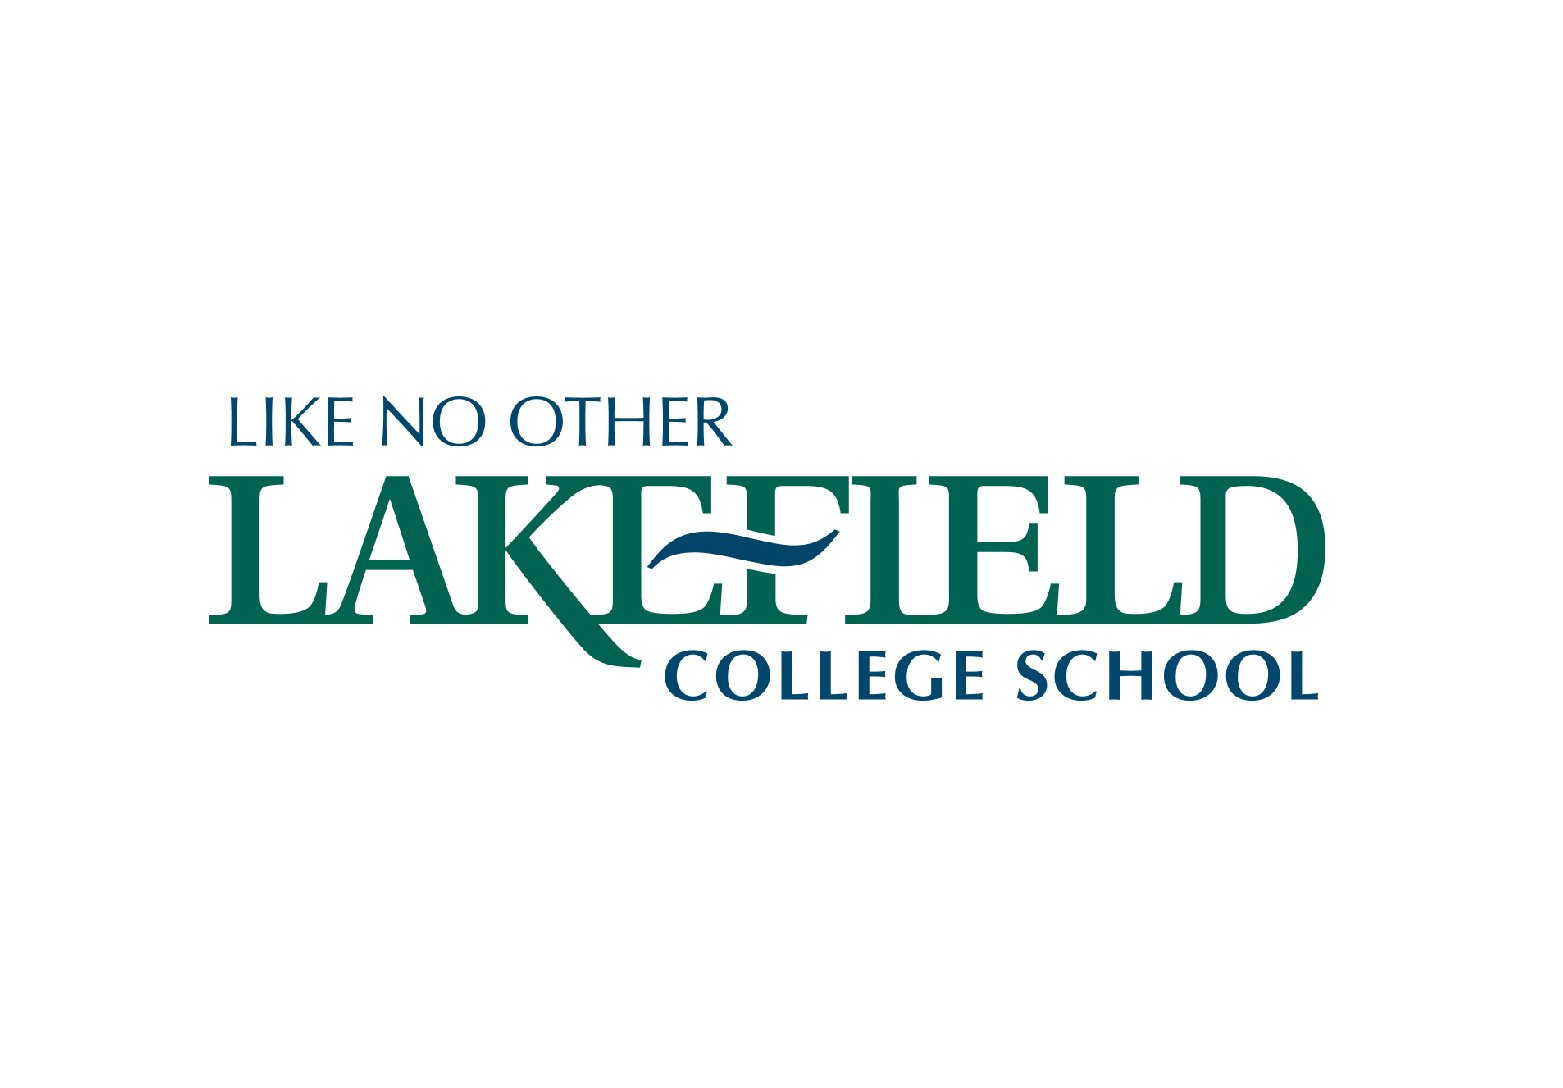 Lakefield College school